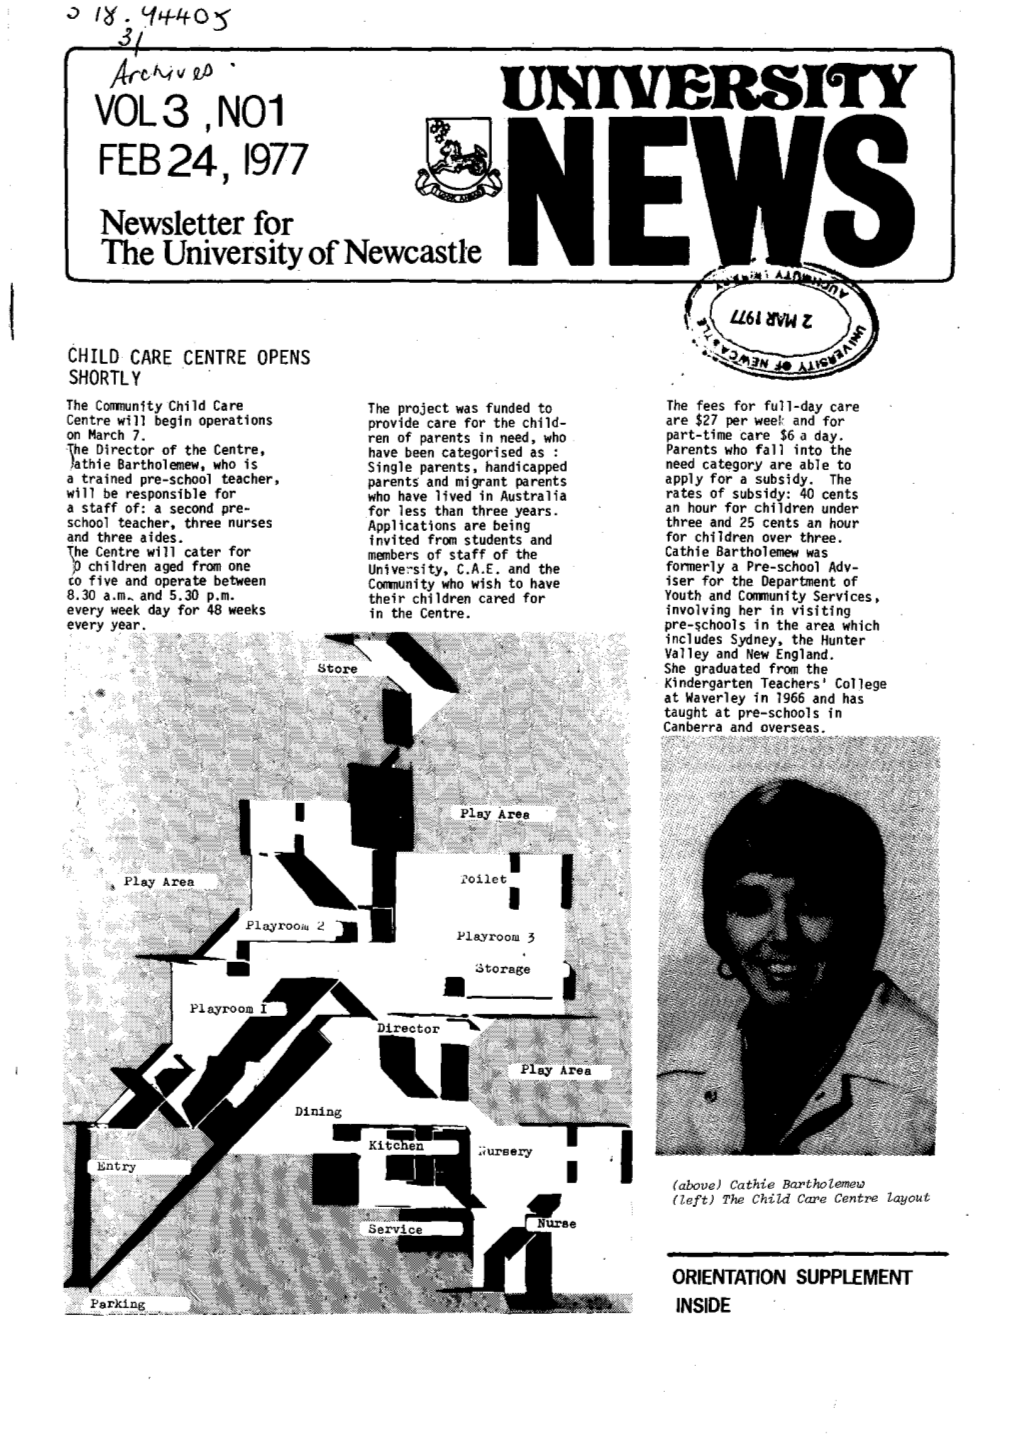 The University News, Vol. 3, No. 1, February 24, 1977